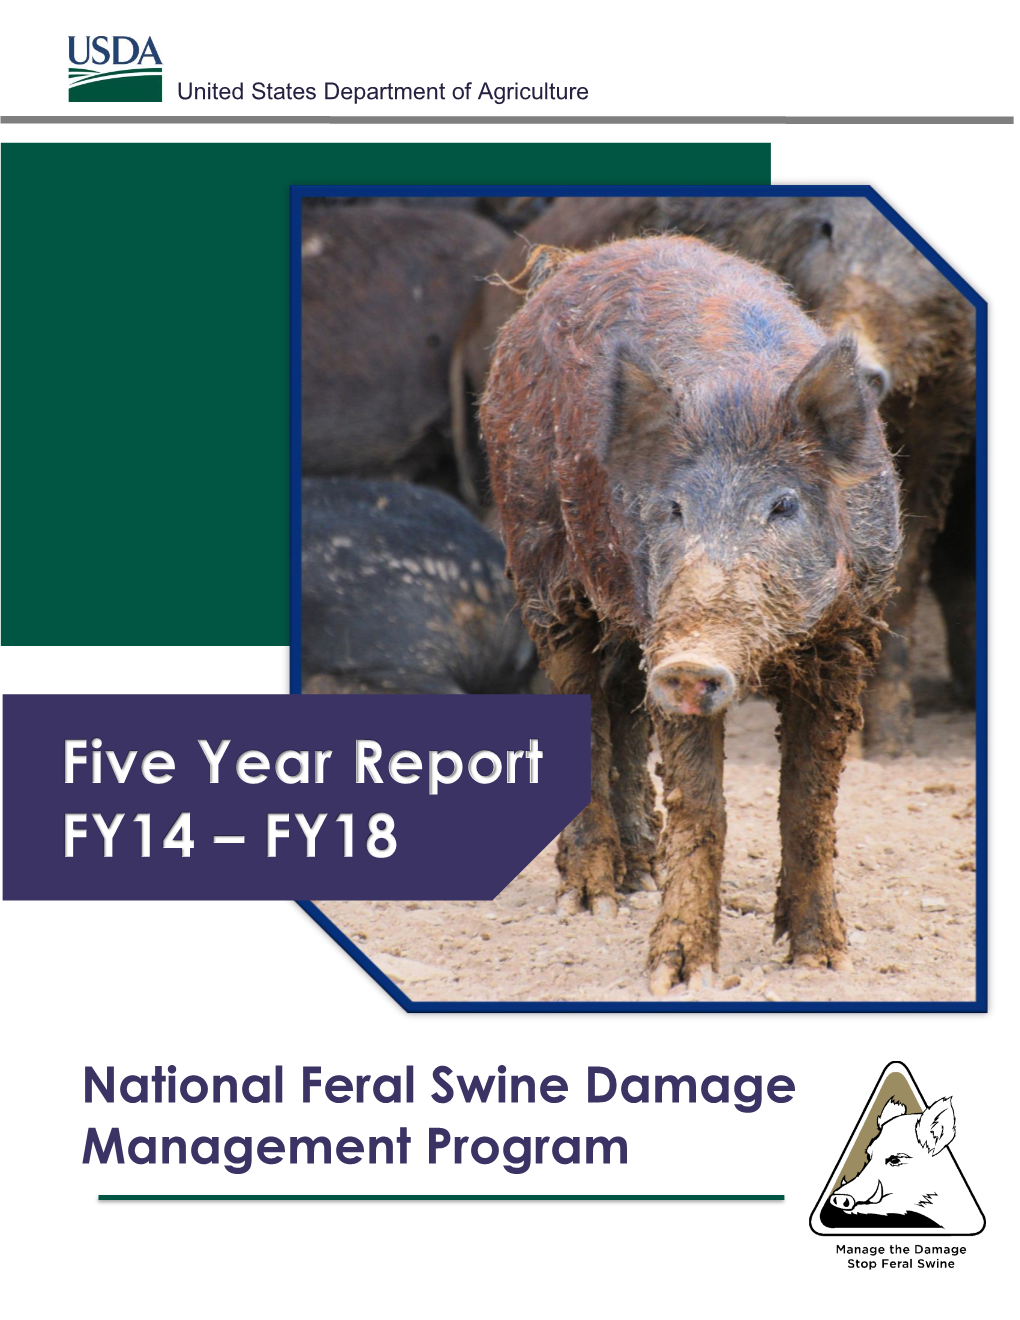 National Feral Swine Damage Management Program